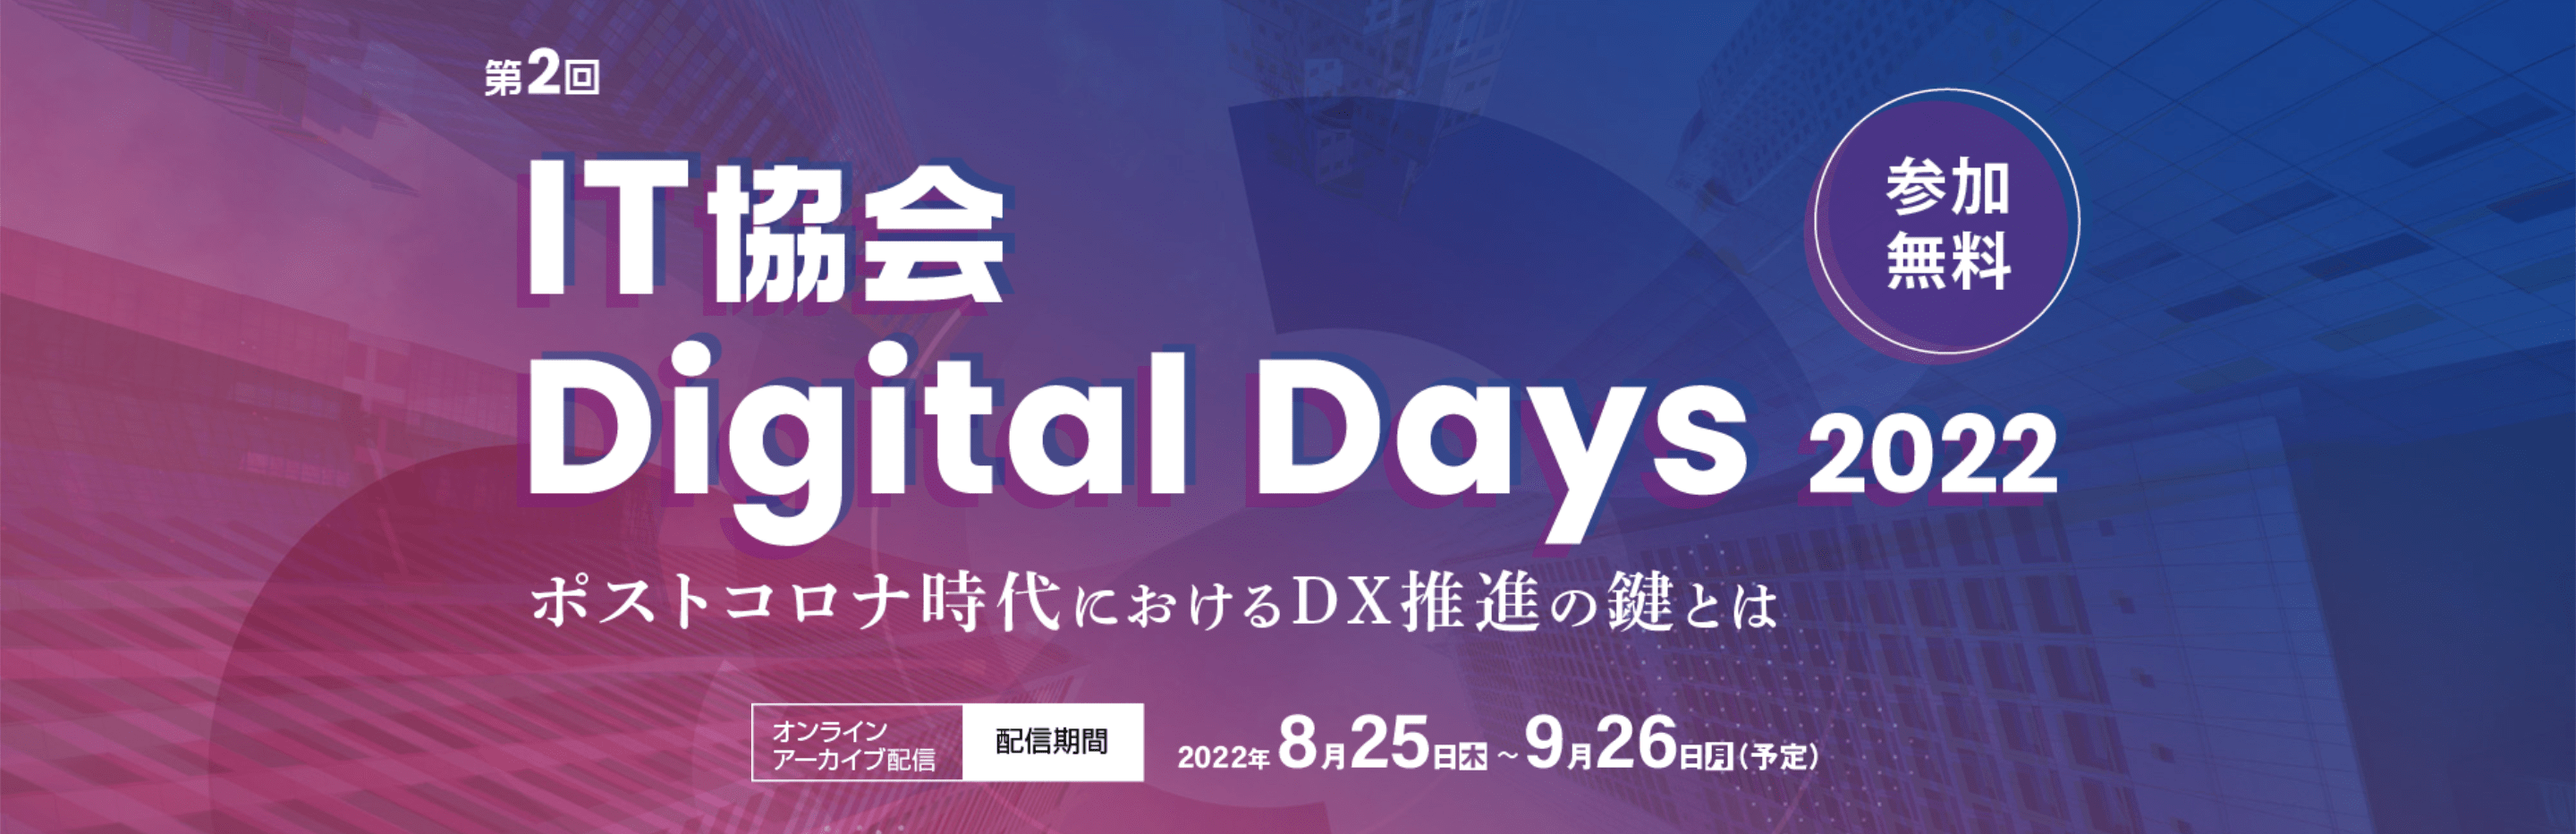 IT協会 Digital Days 2022 ホームページ